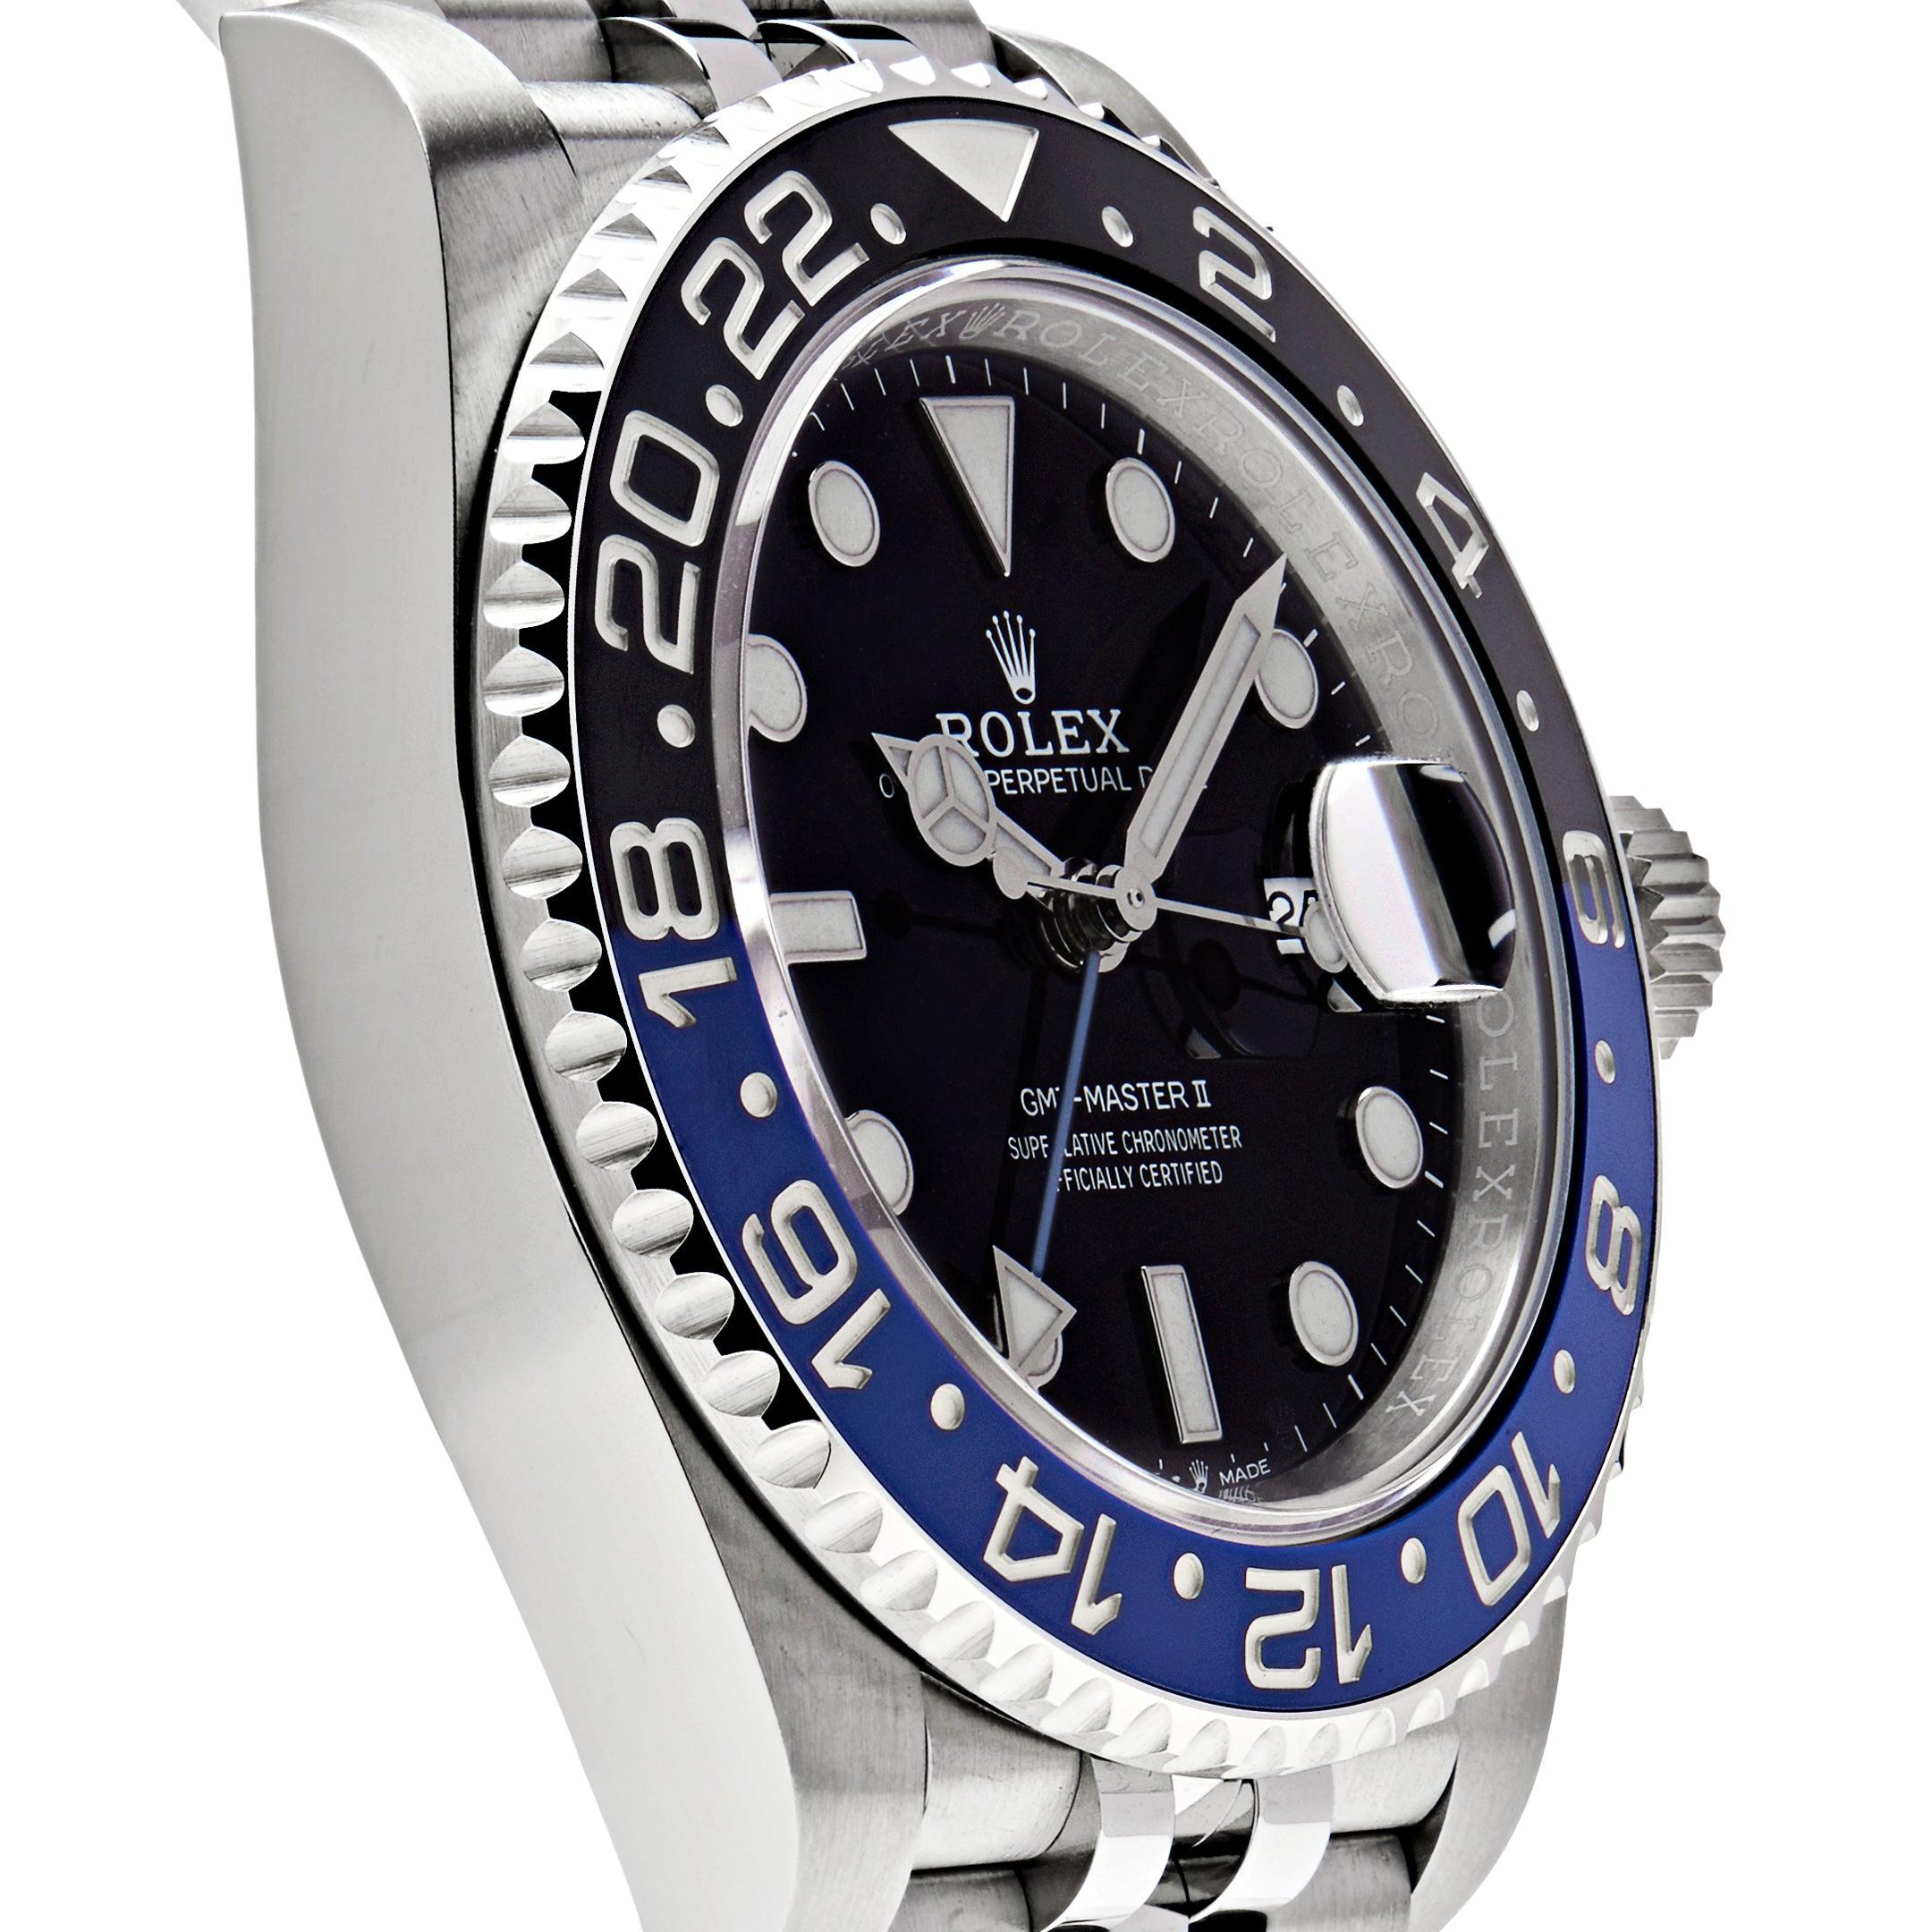 gmt-master ii stainless steel rolex jubilee black dial men's watch 126710blnr